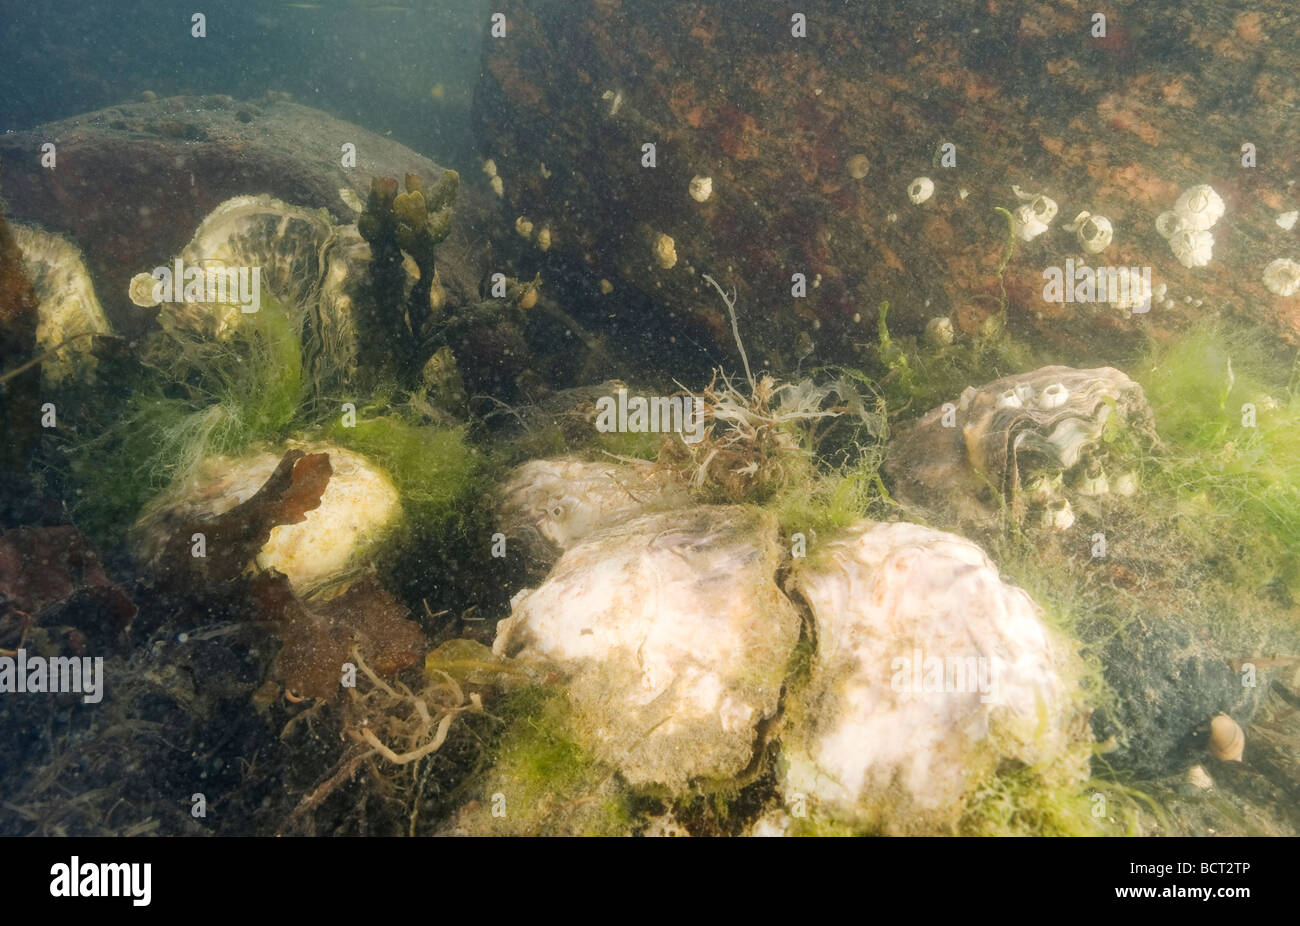 Oyster bed (Crassostrea gigas), Sweden Stock Photo - Alamy